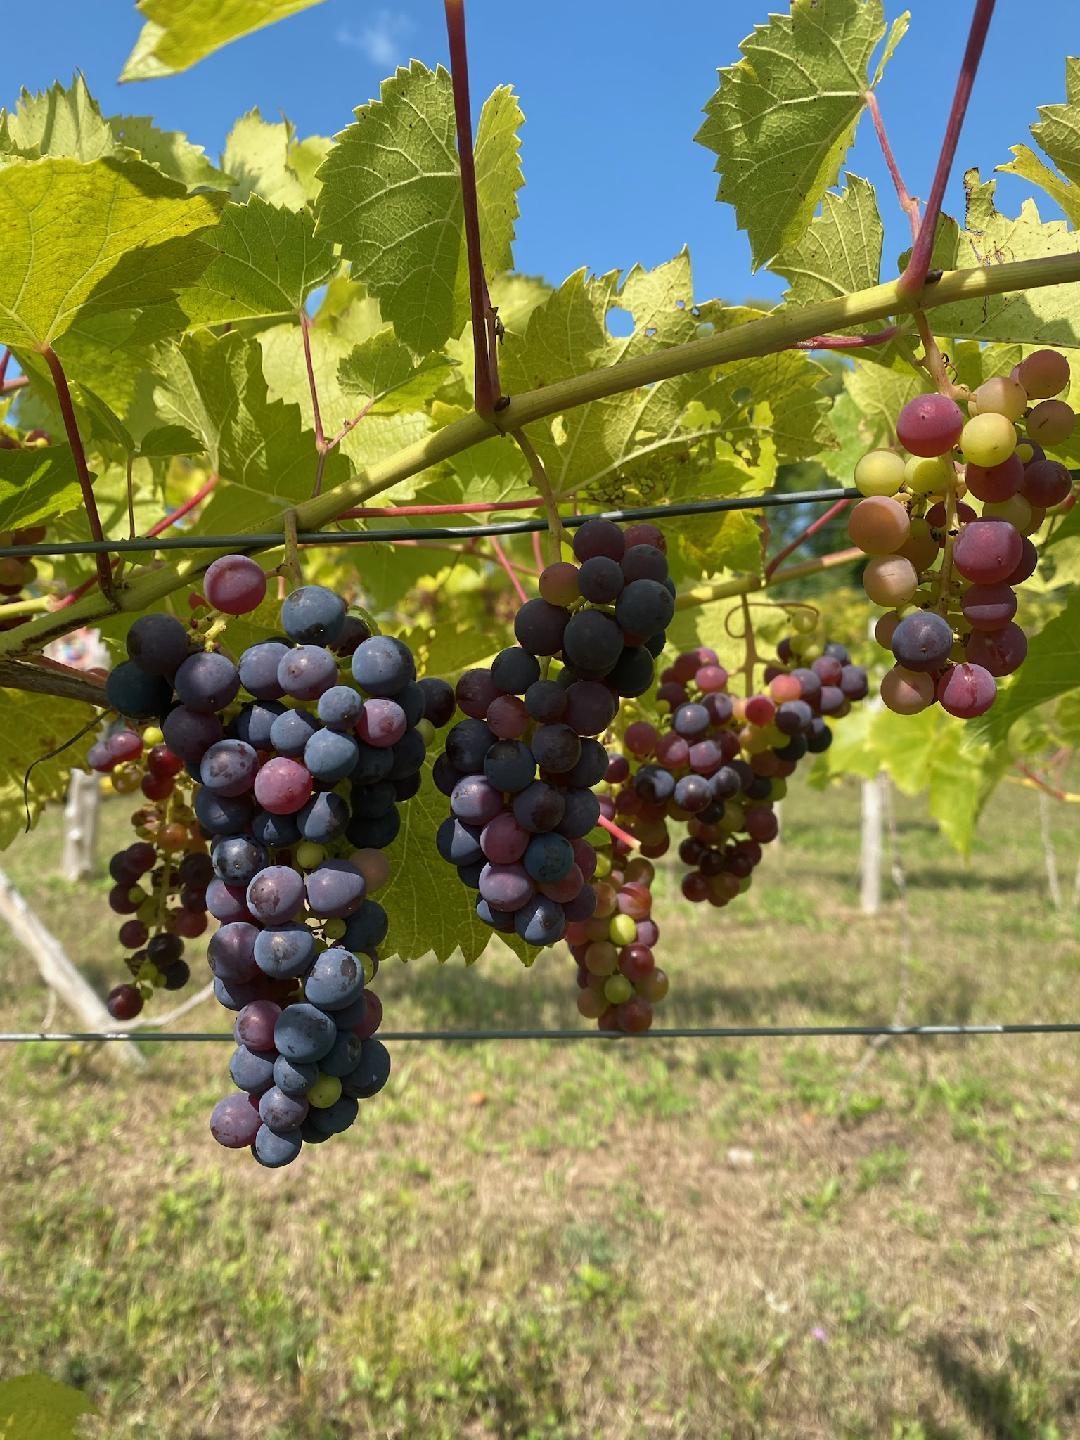 Grapes on the vine photo.jpeg